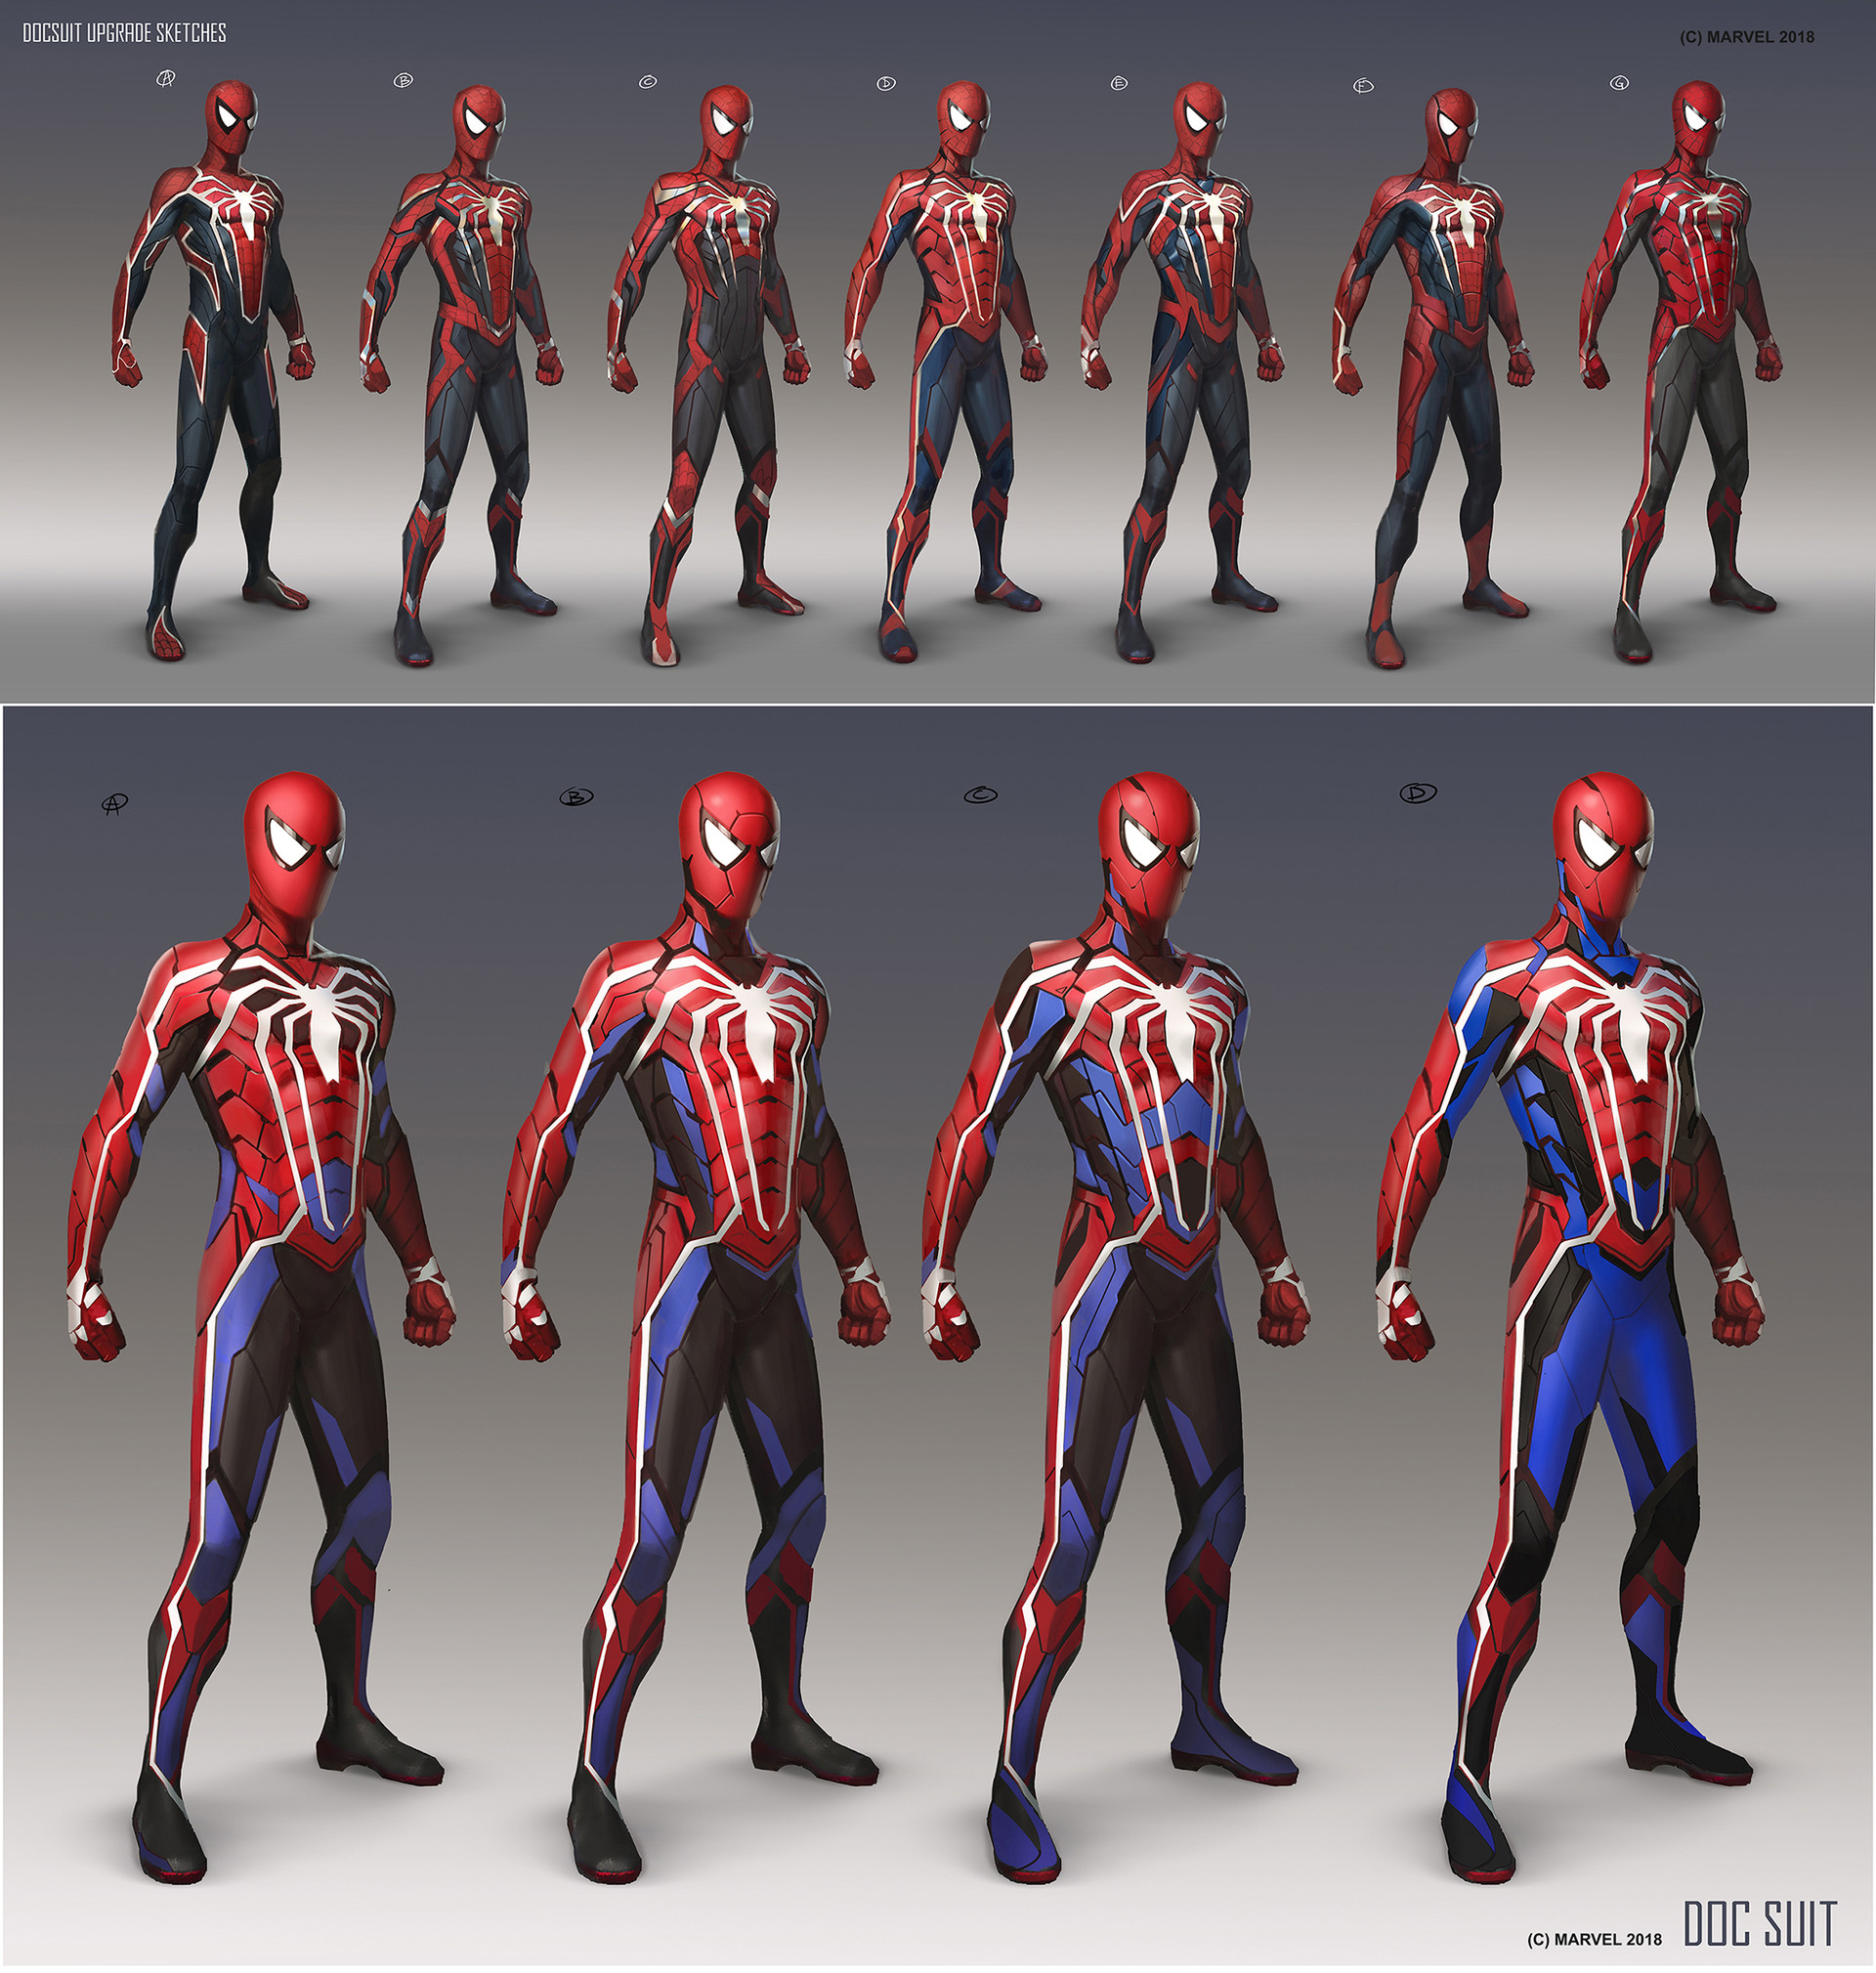 Spider-Man Advanced Suit Explained